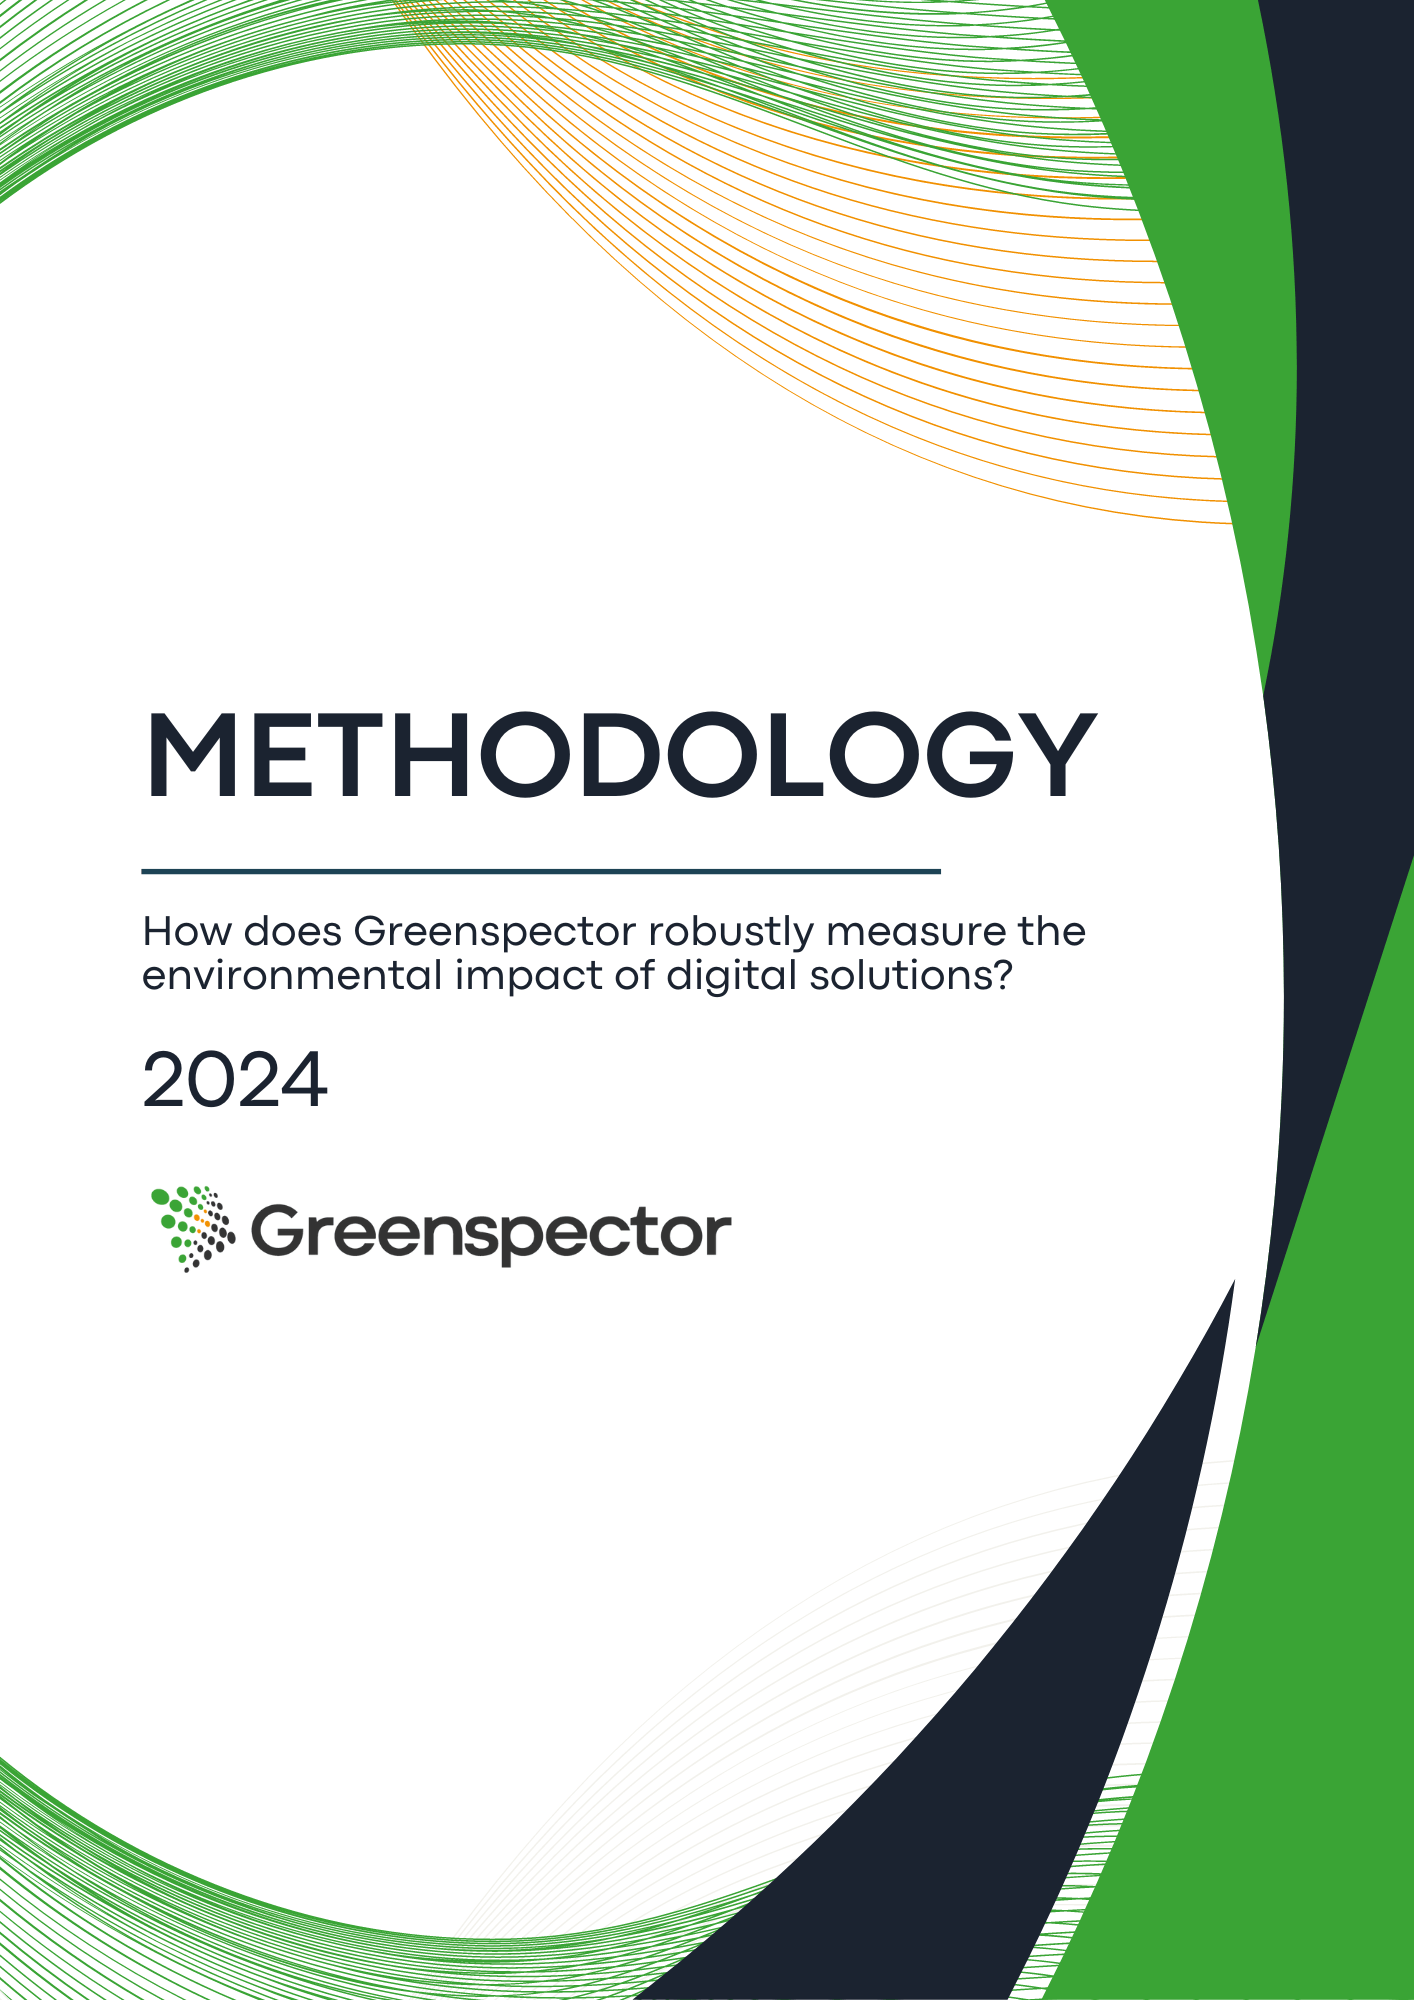 Methodology greenspector